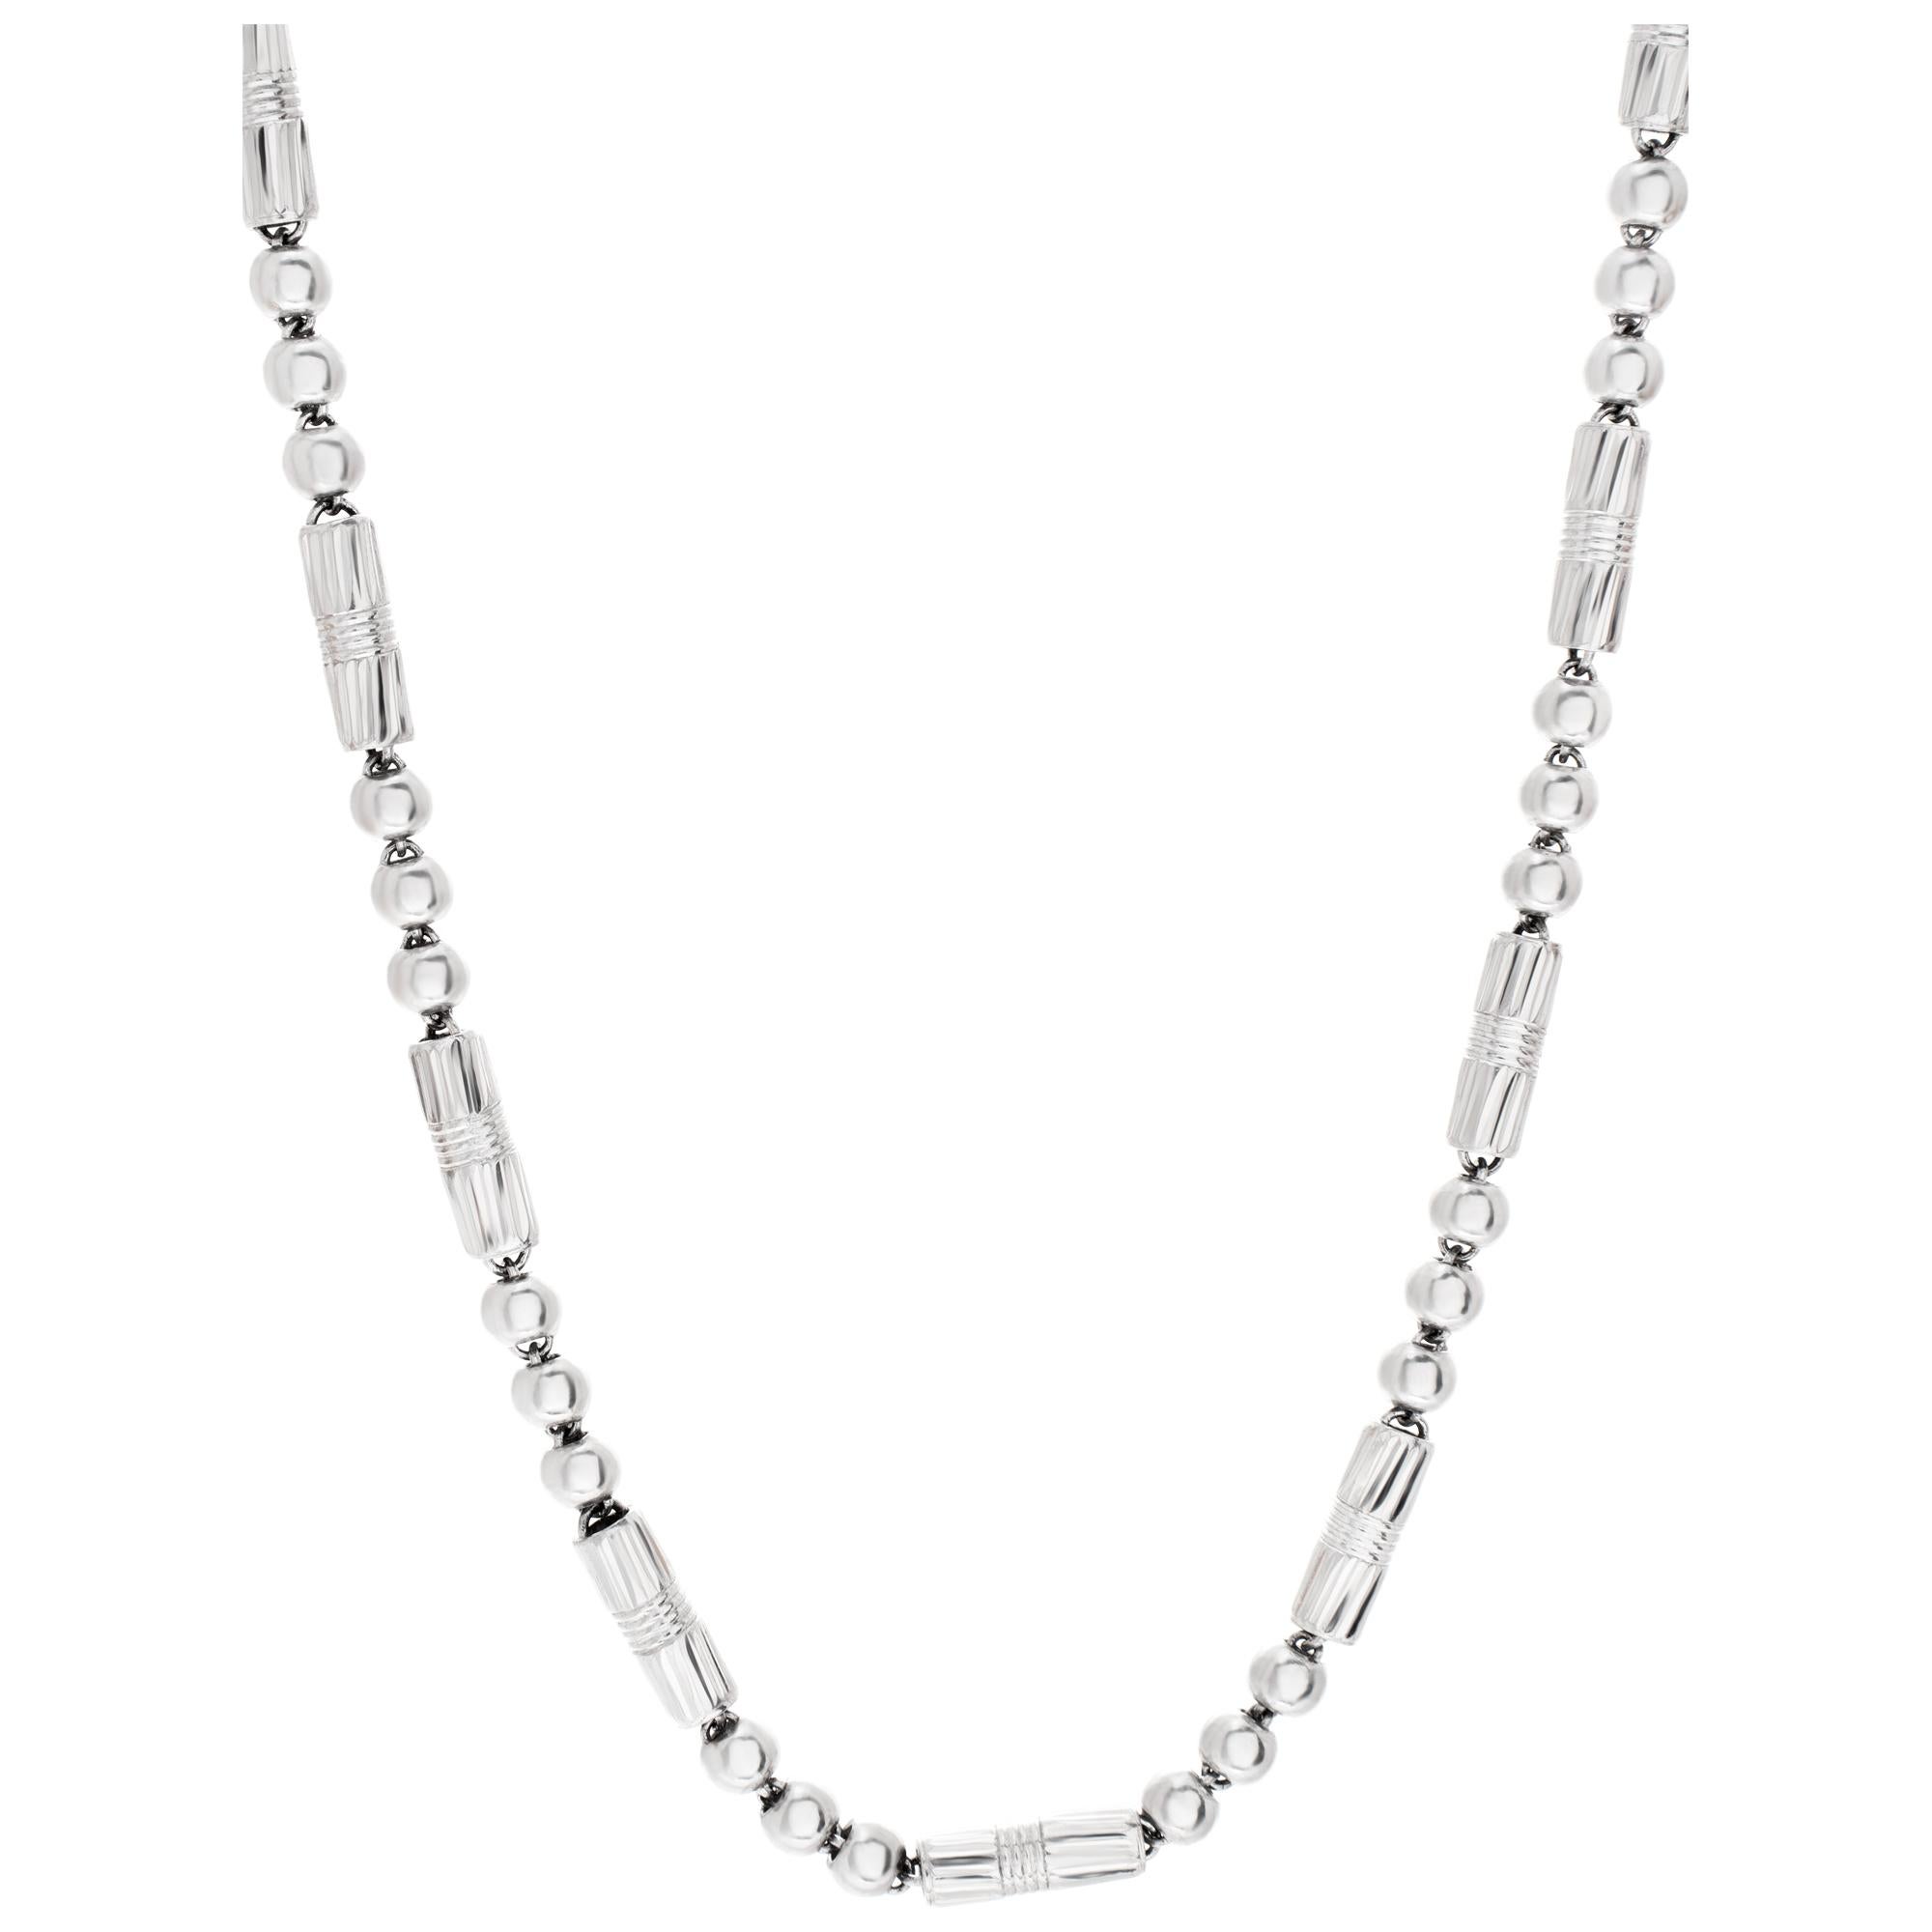 Chain Necklace in Platinum